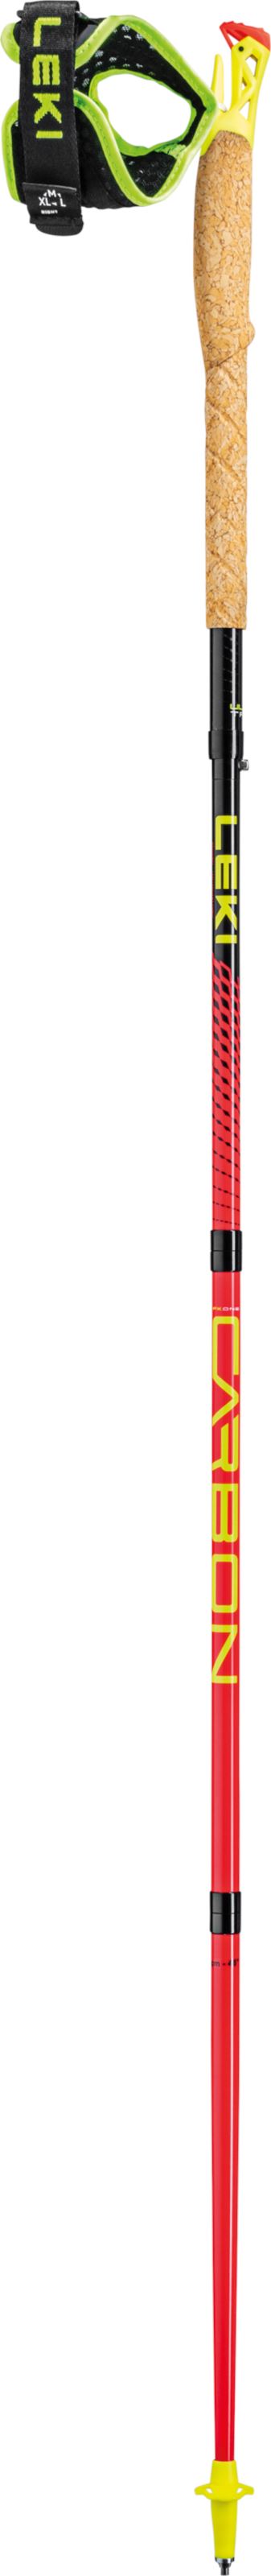 LEKI Ultratrail FX.One Hiking Poles Bright Red/Black/Neon Yellow 110cm 